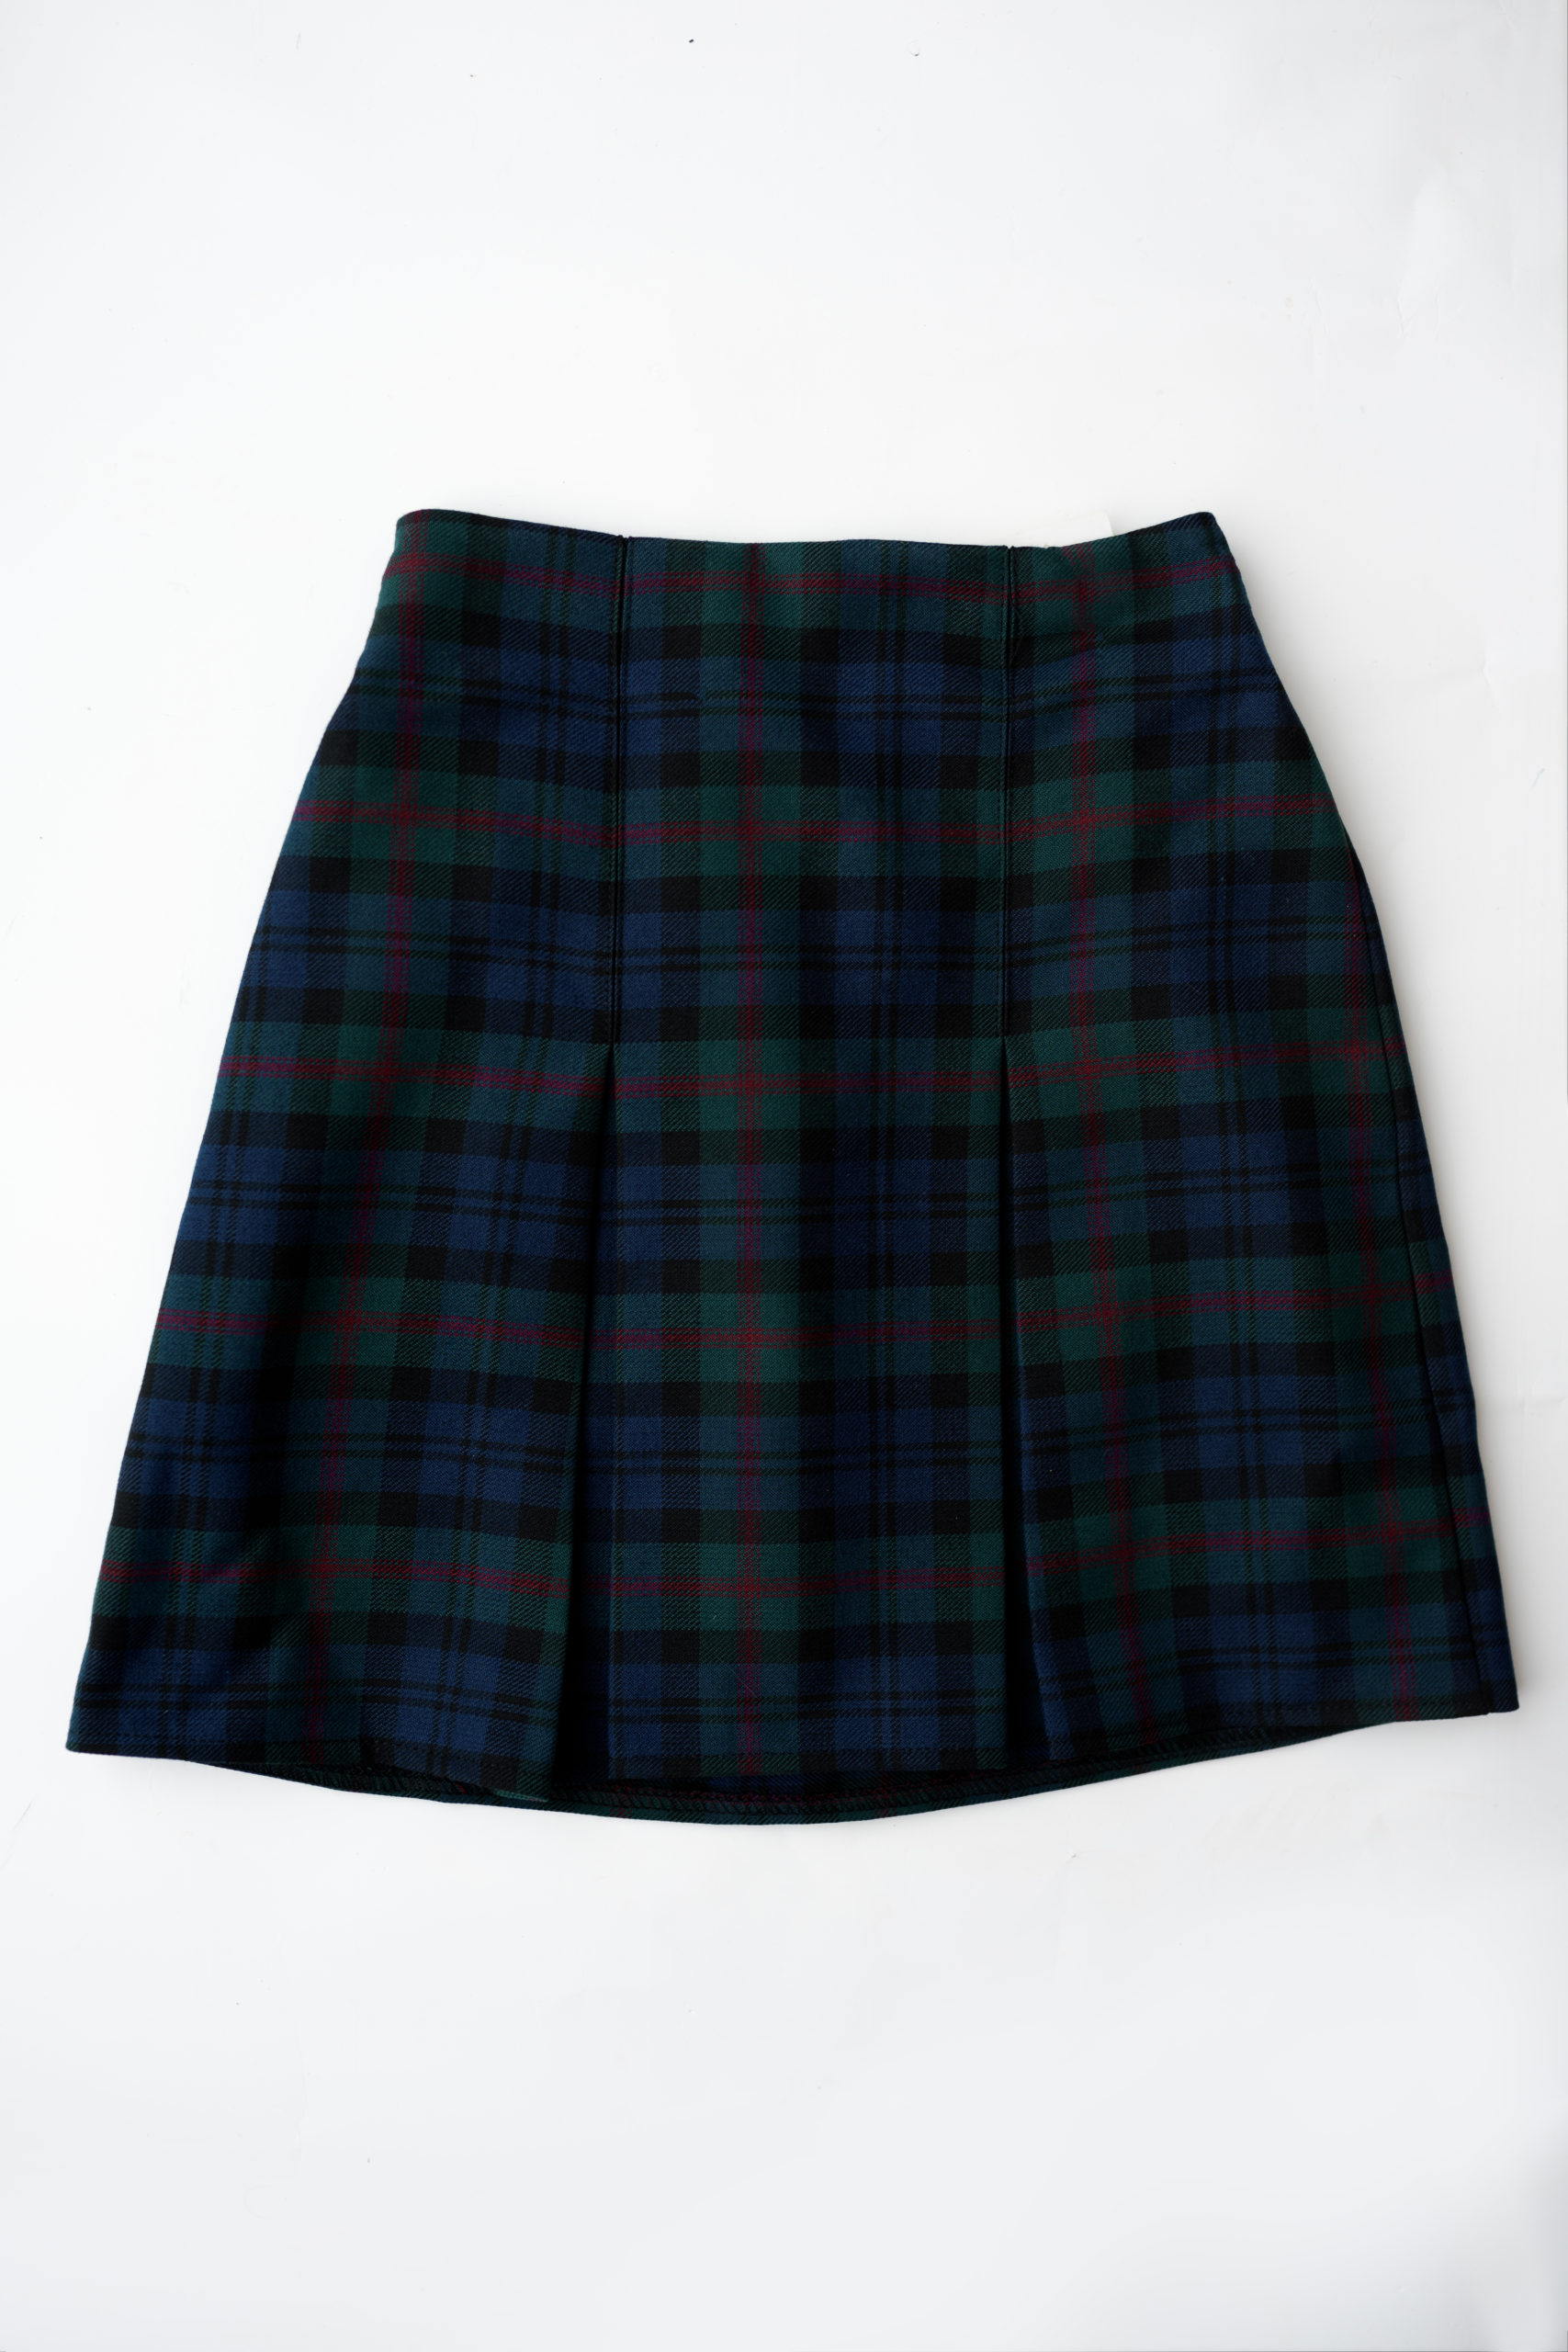 St Columbans Primary School Tartan Pleat Skirt